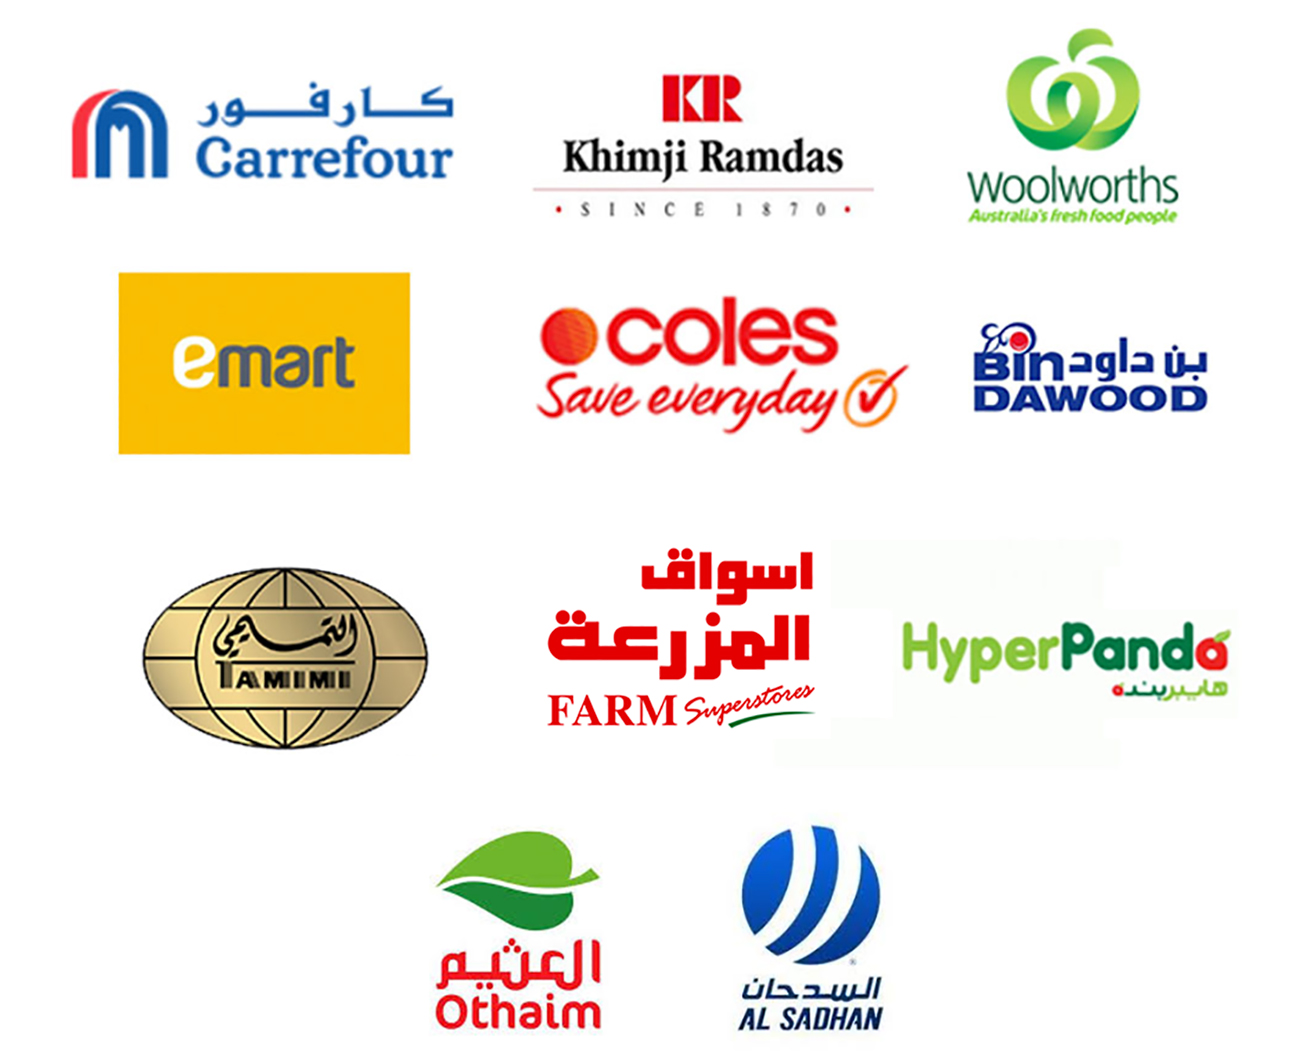 //www.arabbeverages.com/wp-content/uploads/2019/10/int-retials-1.jpg